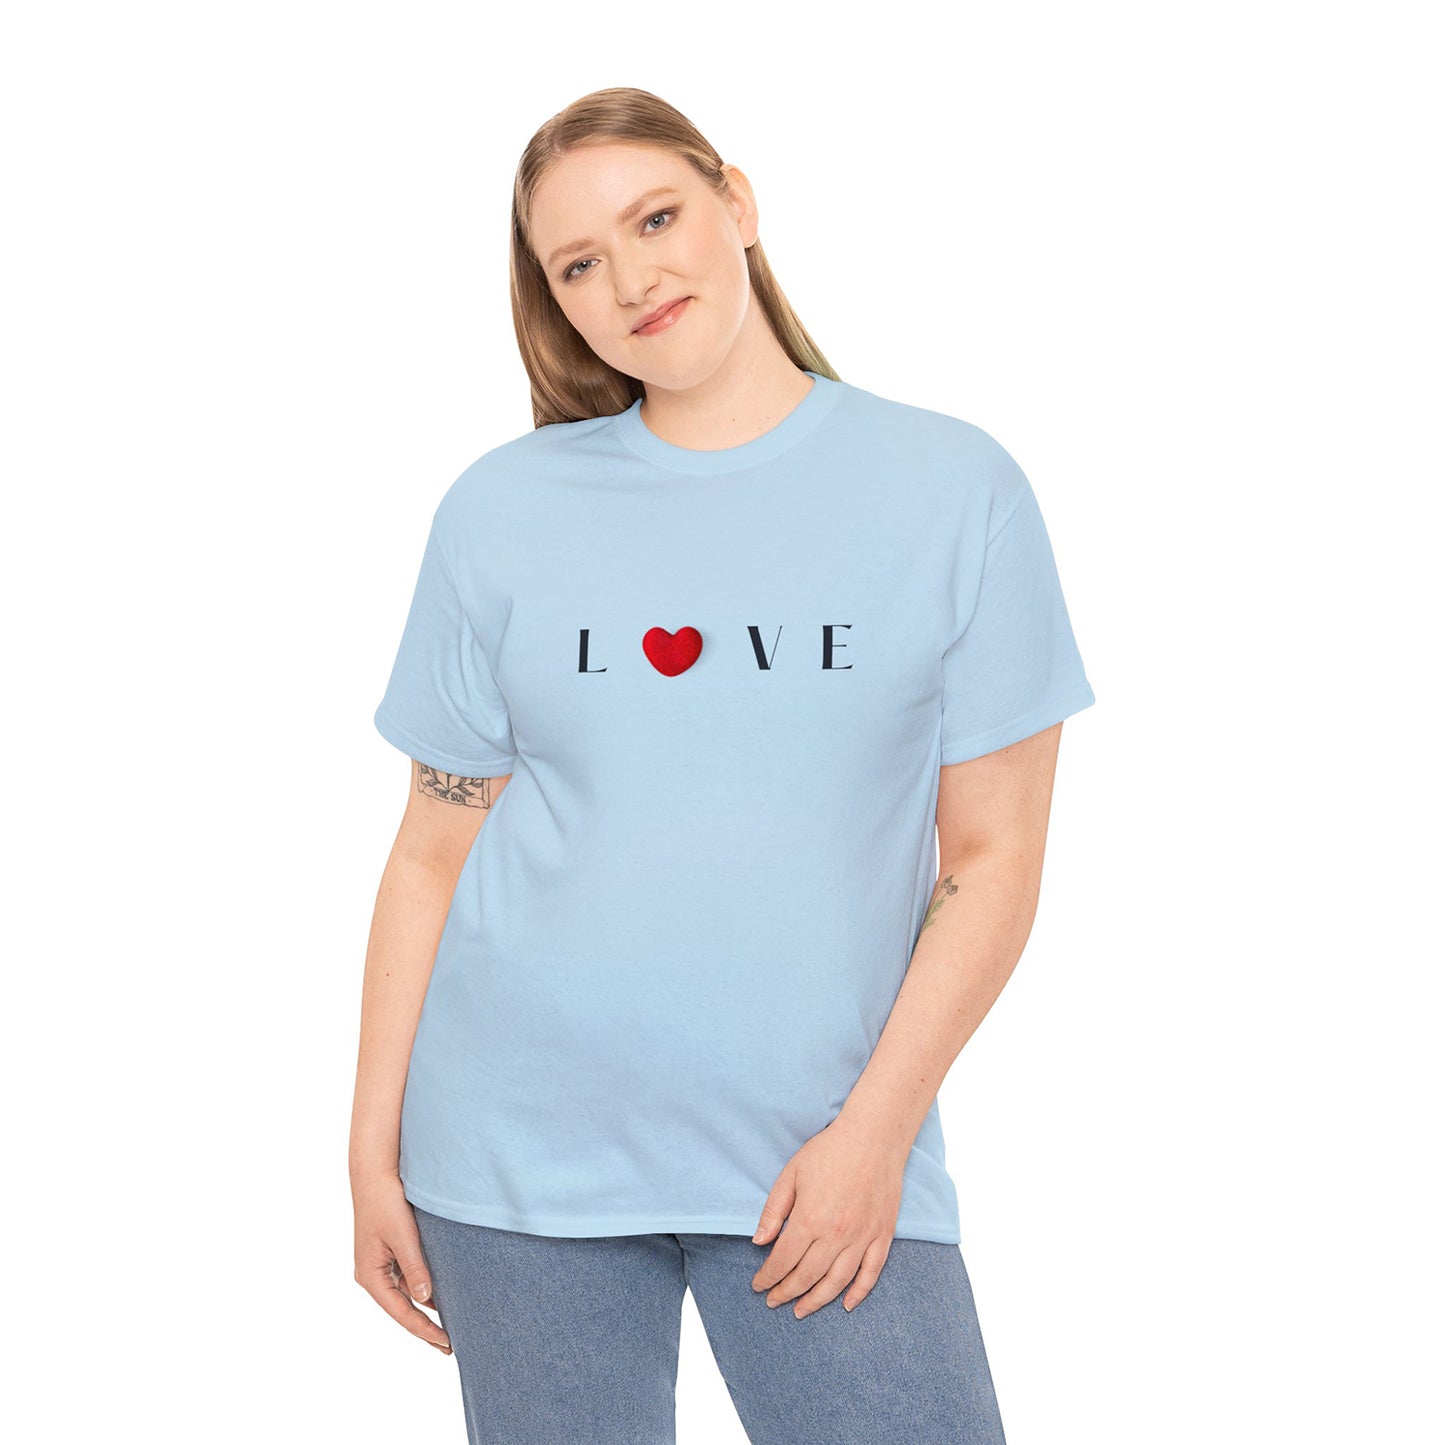 Love Heart printed T-shirt